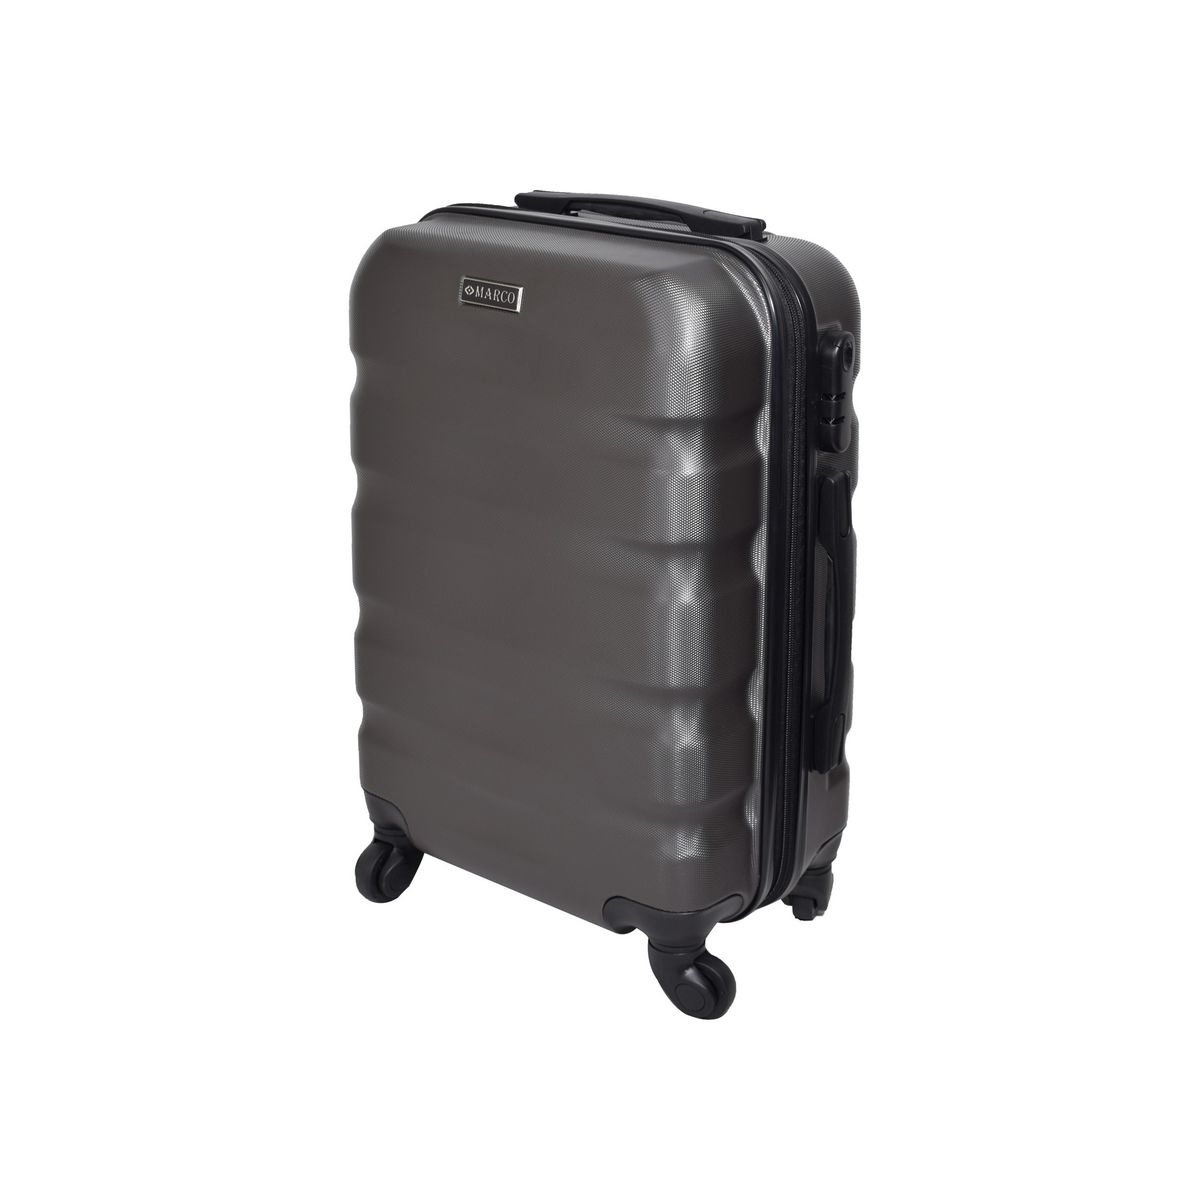 Marco Aviator Luggage Bag - 24 inch [Grey]